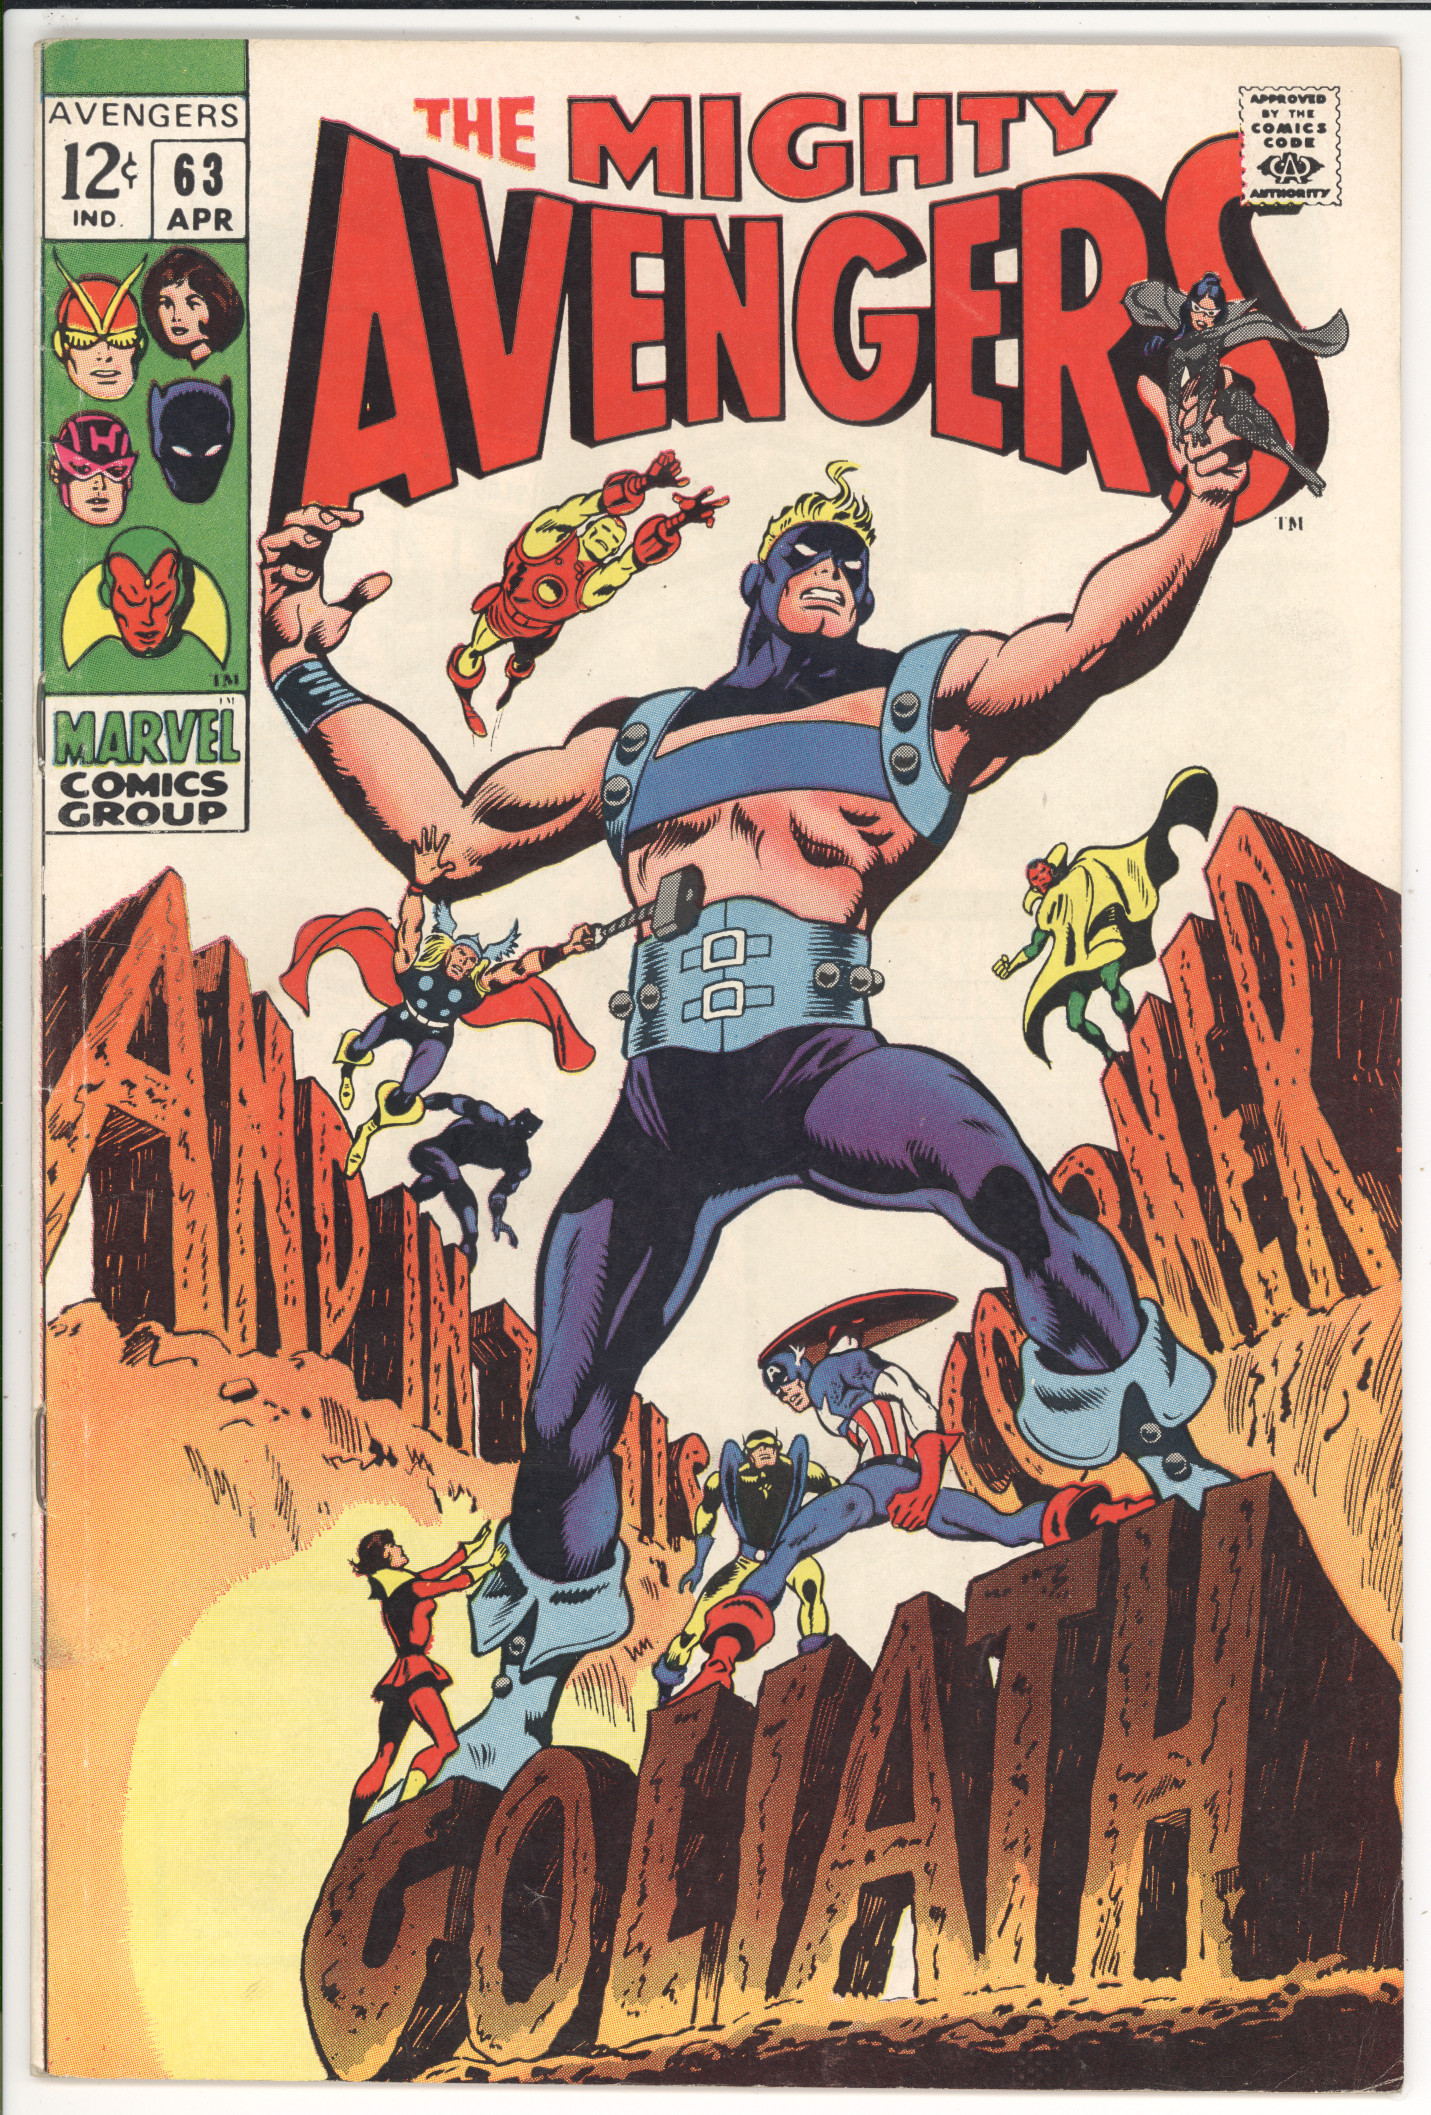 Avengers #63 front